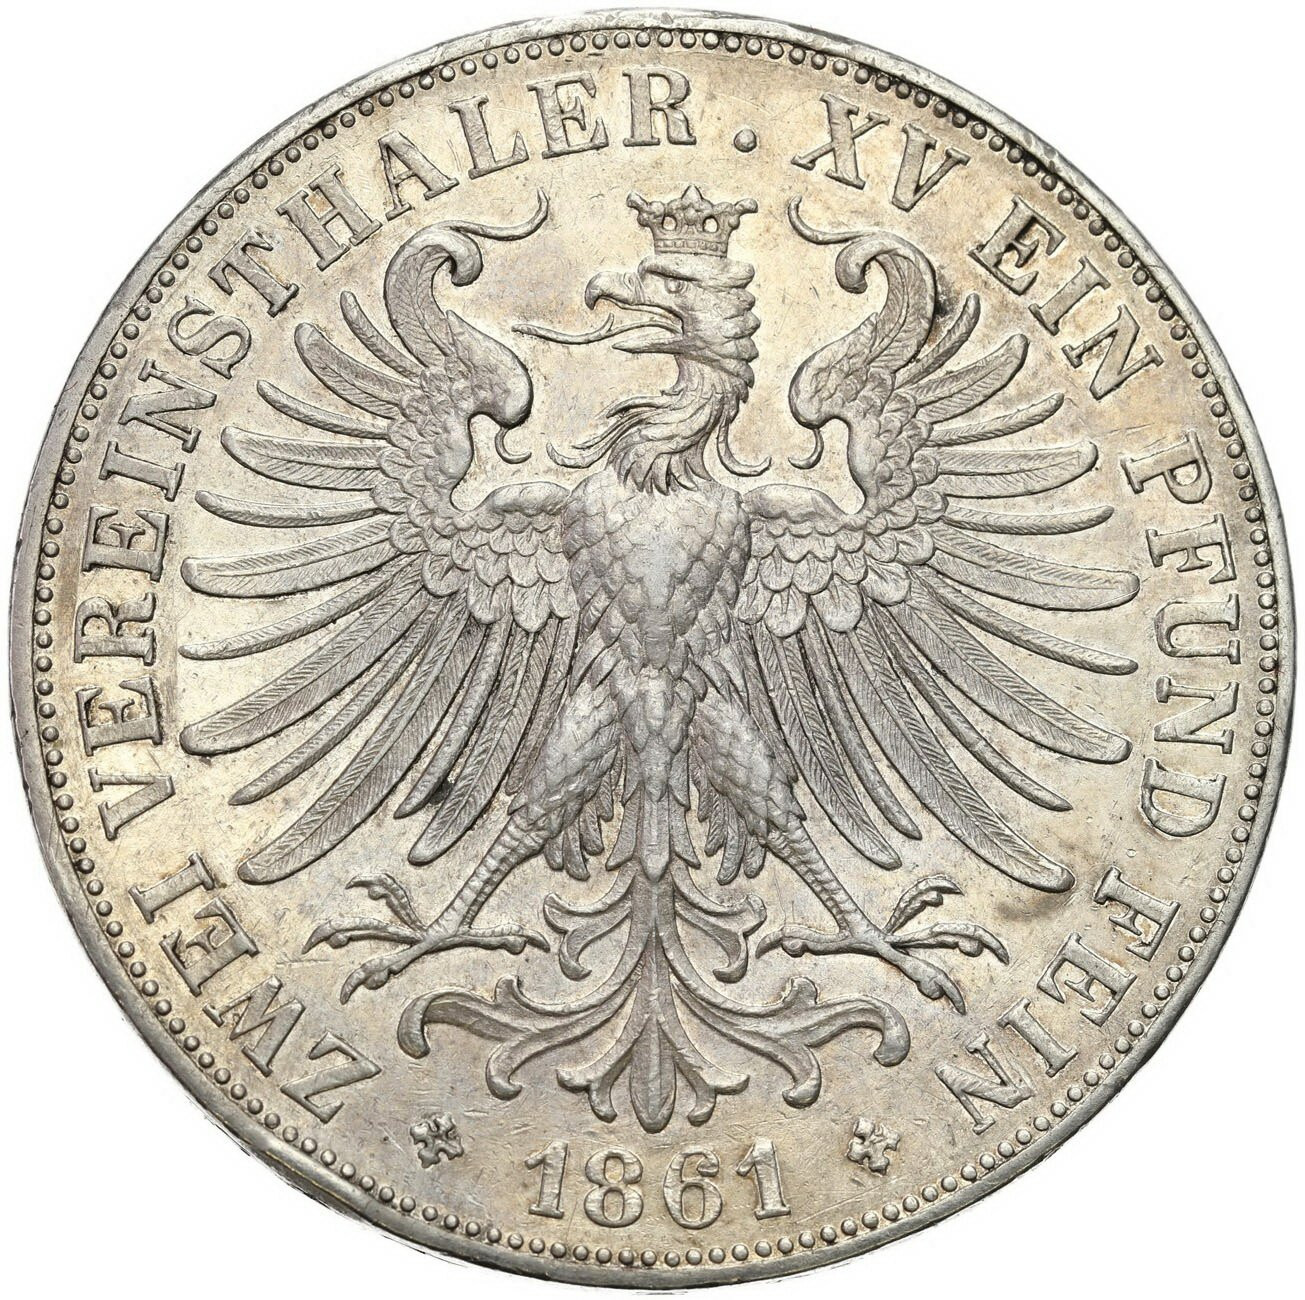 Niemcy, Frankfurt. Dwutalar = 3 1/2 guldena 1861 